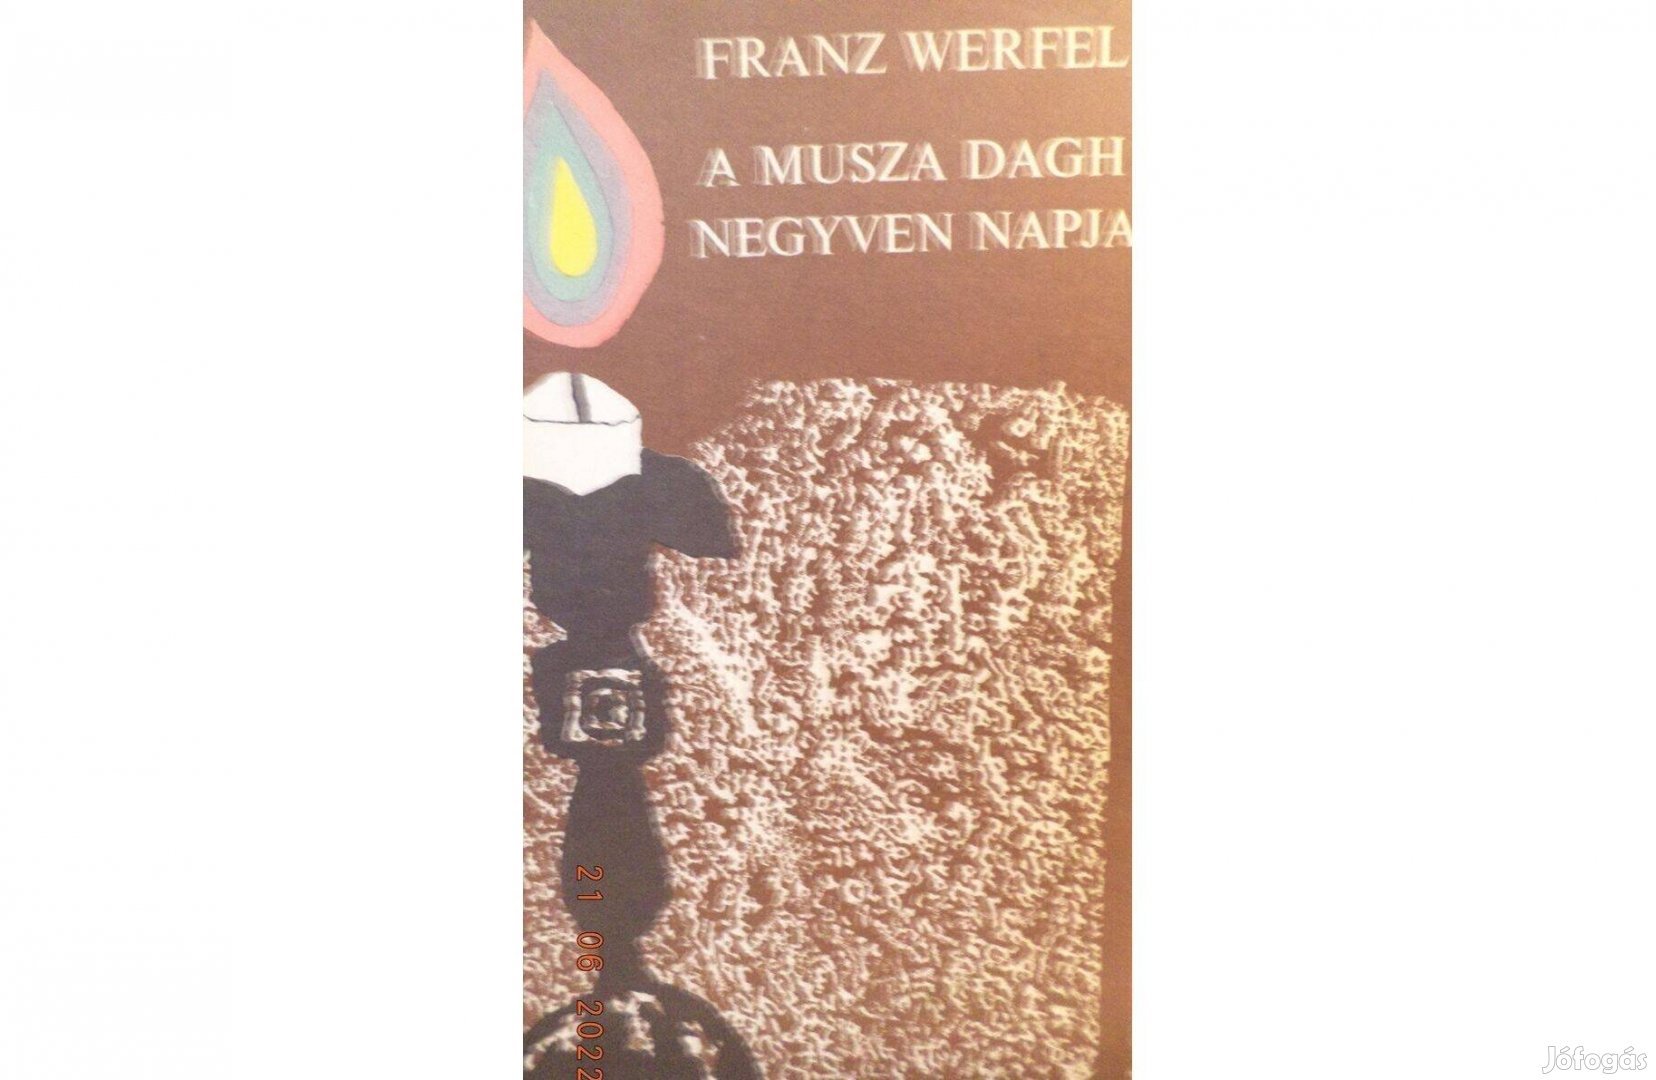 Franz Werfel: A Musza Dagh negyven napja I